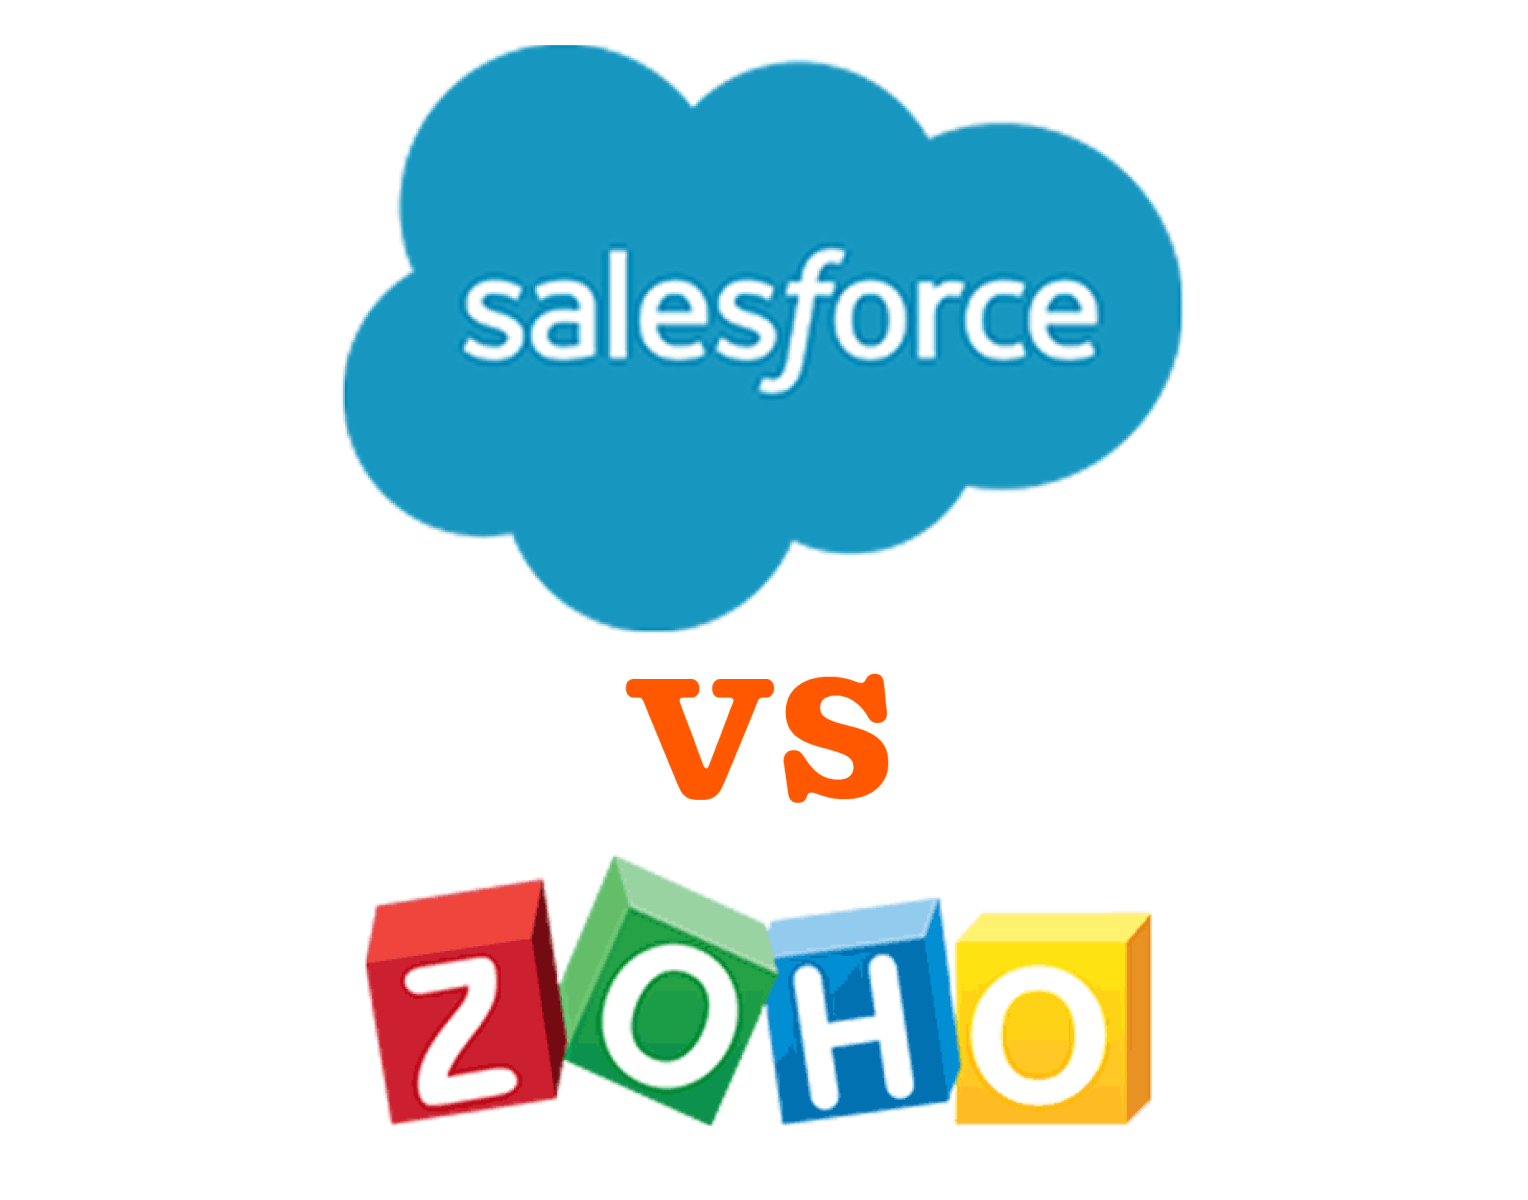 salesforce vs zoho logos